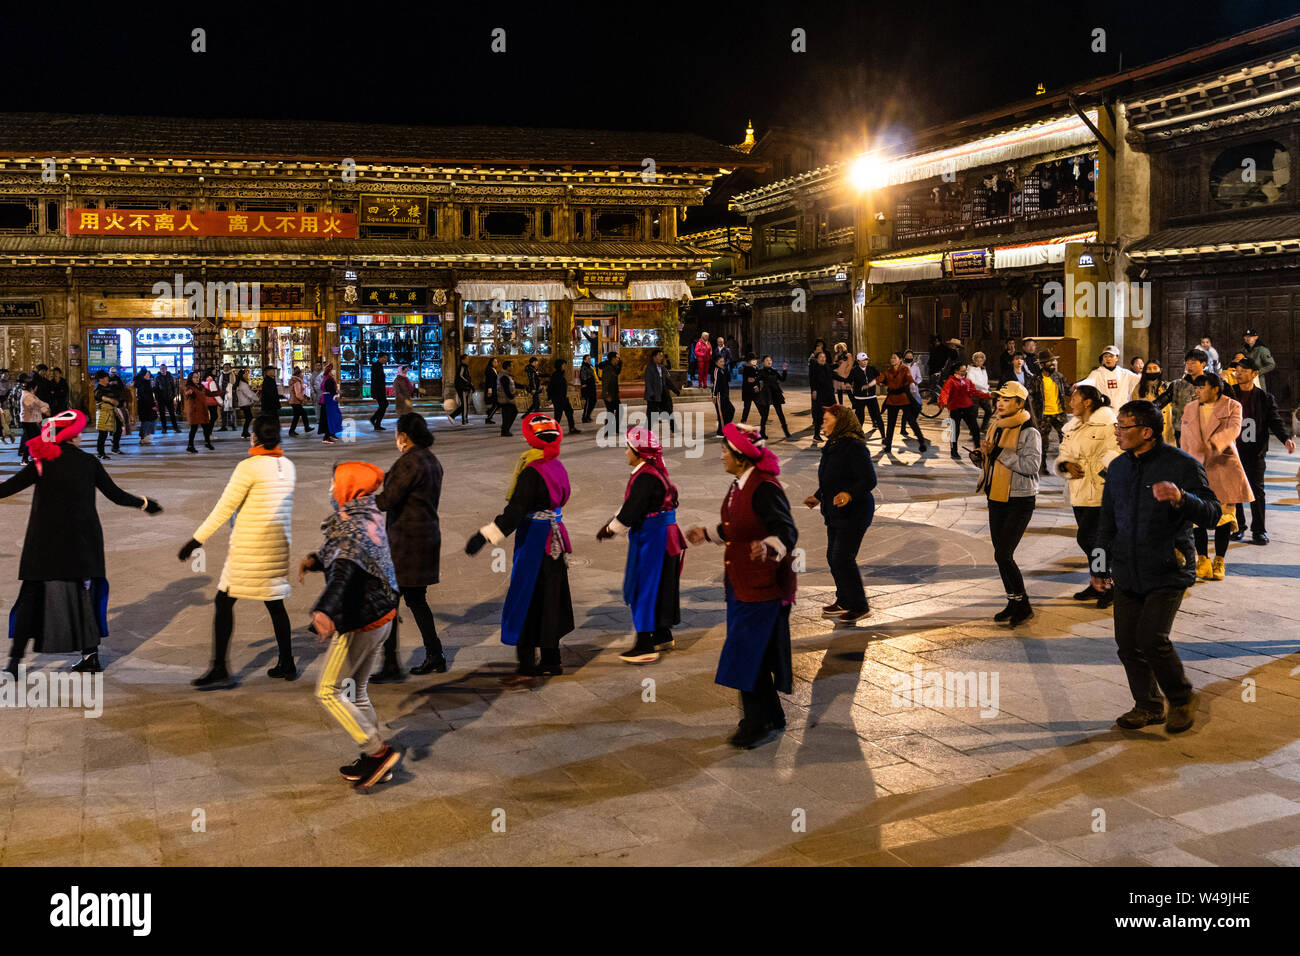 Shangri La, China - 28. Februar 2019: die Menschen tanzen traditionelle tibetische Tänze im Kreis in der Nacht im Herzen der Altstadt in Shangri La Stockfoto